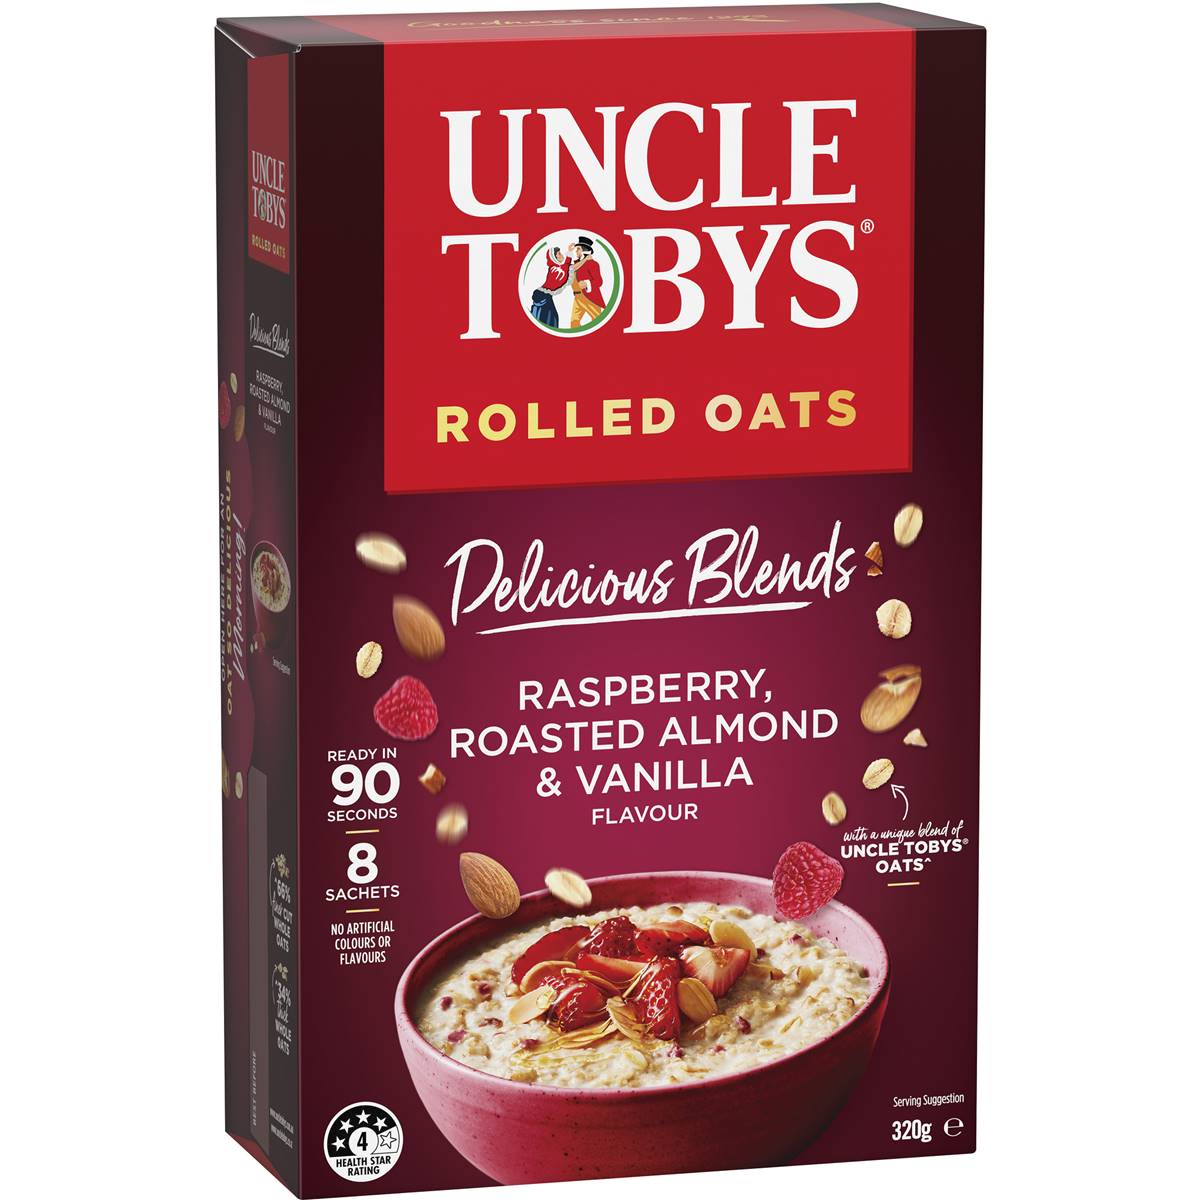 Calories in Uncle Tobys Oats Porridge Delicious Blends Raspberry, Almond & Vanilla